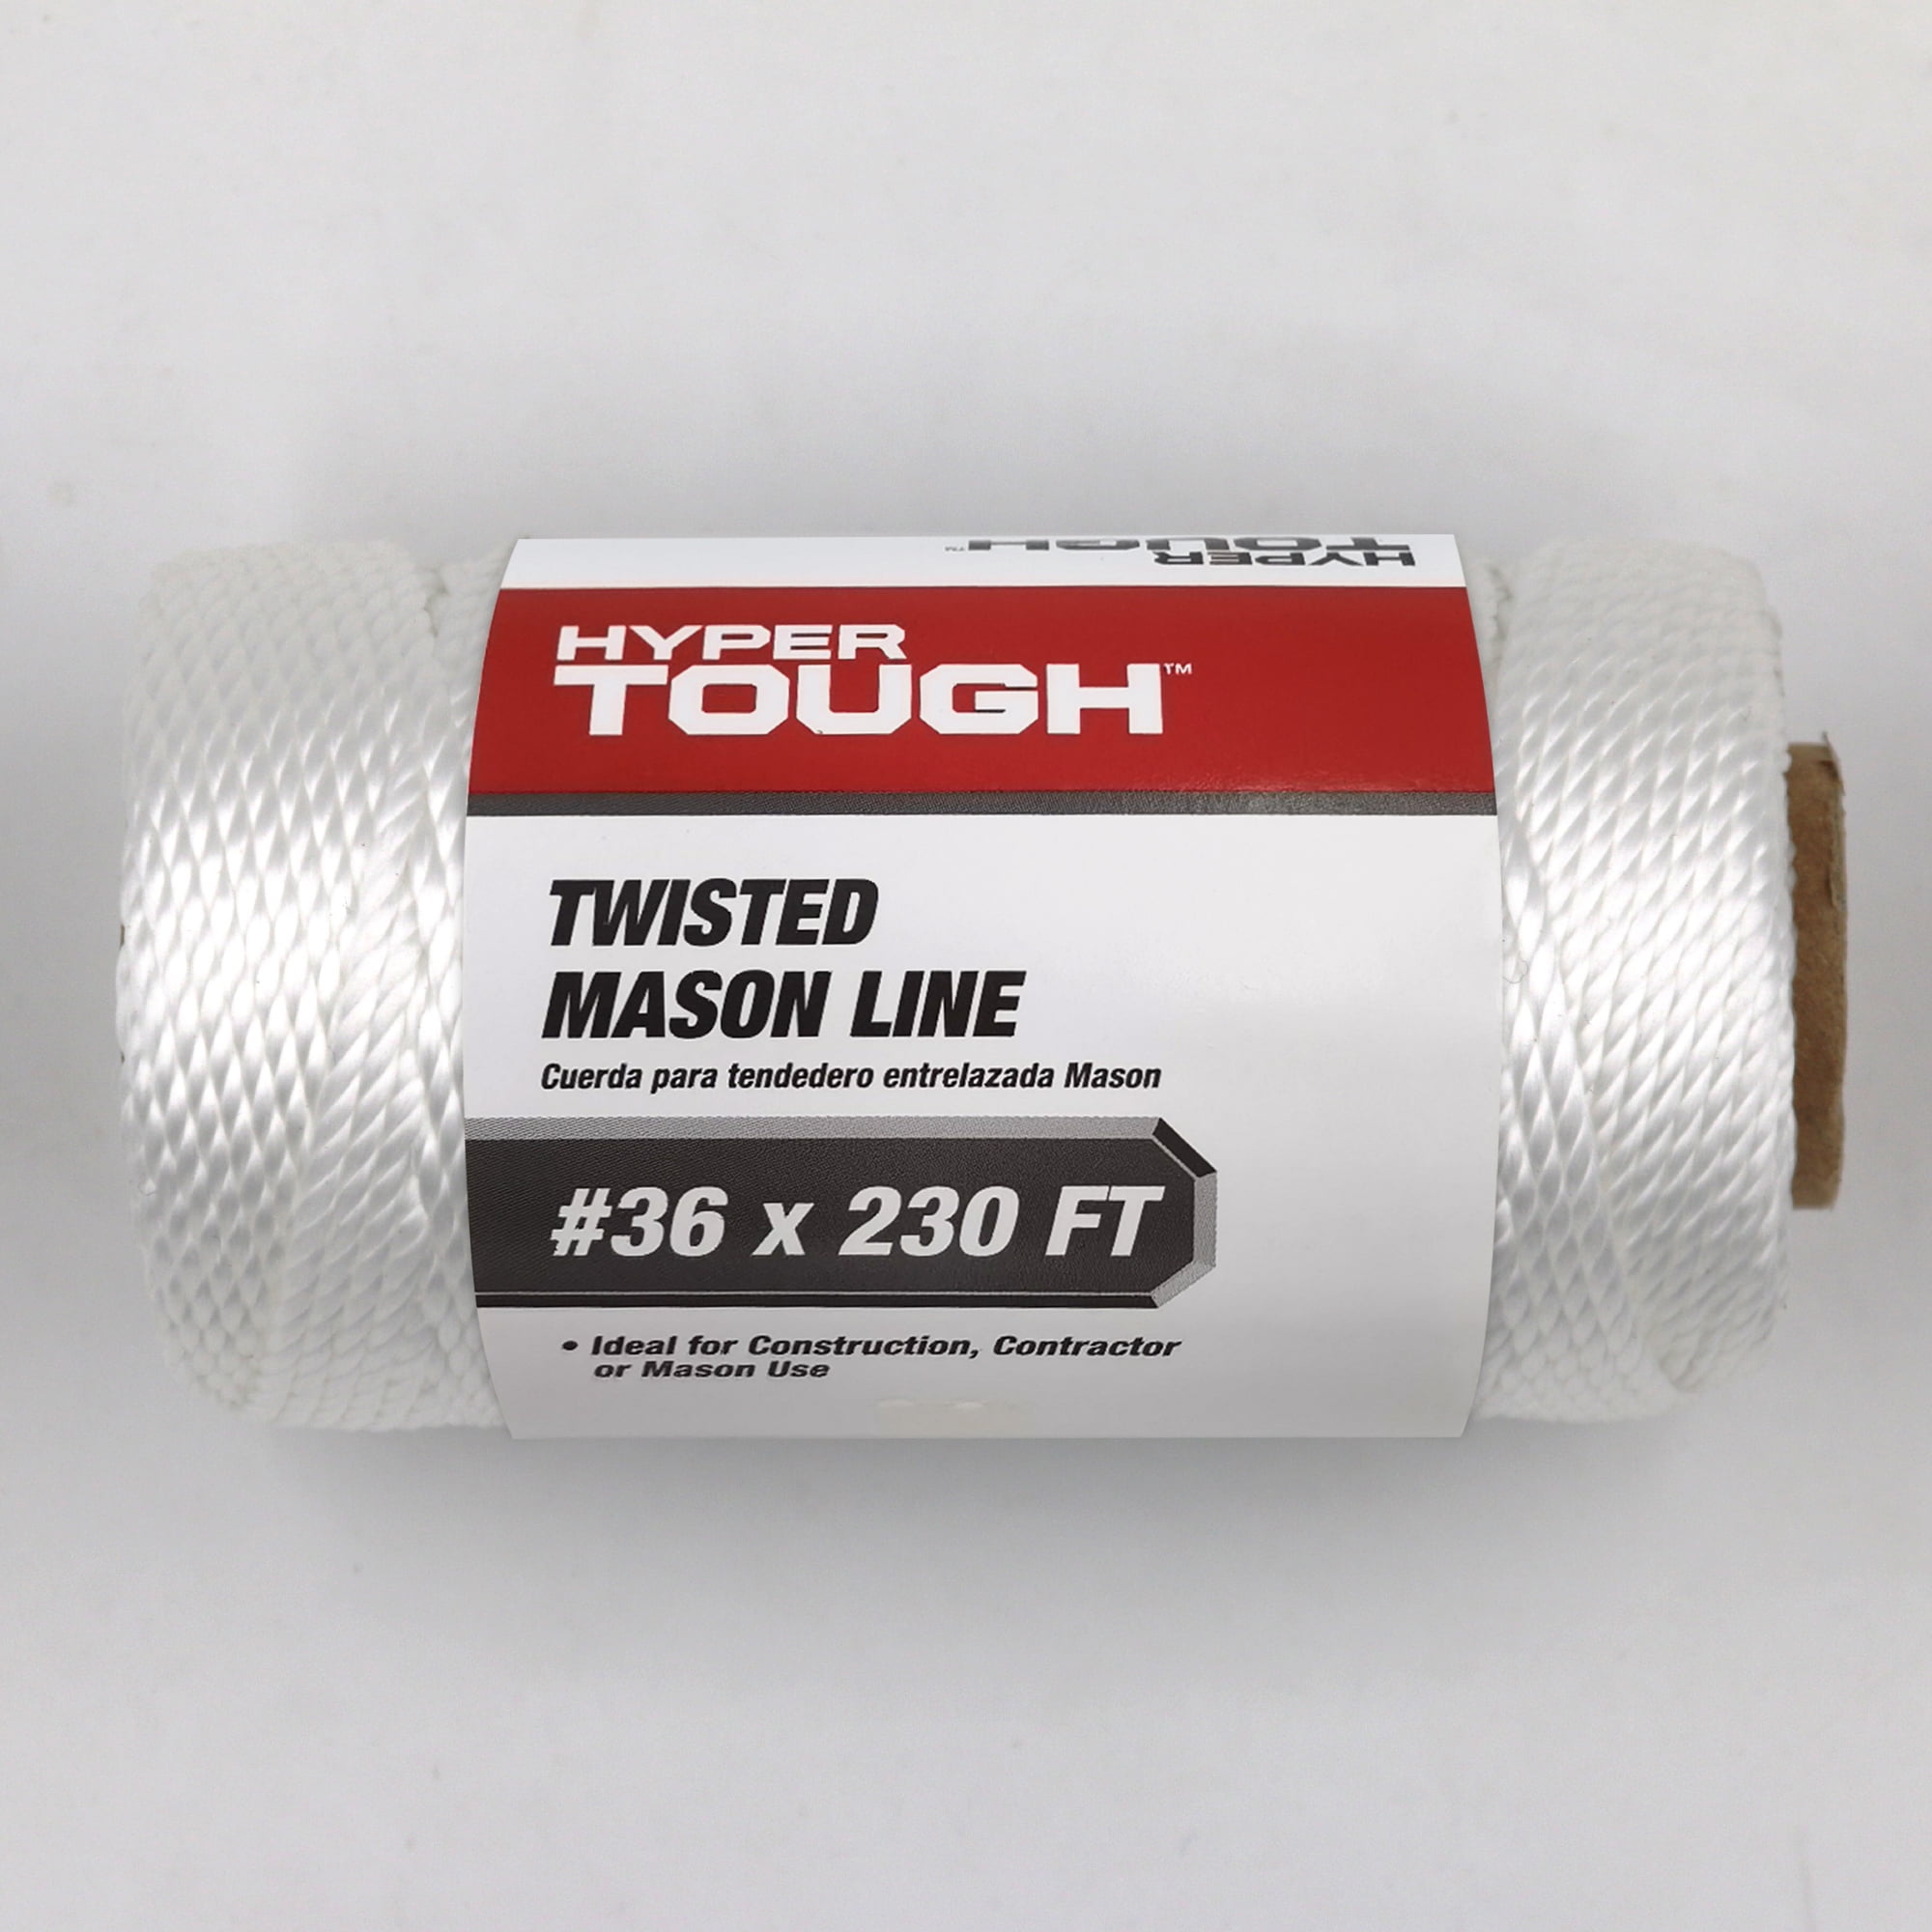 Hyper Tough 230 feet Twisted Polypropylene Mason Line, White, String & Twine, Durable